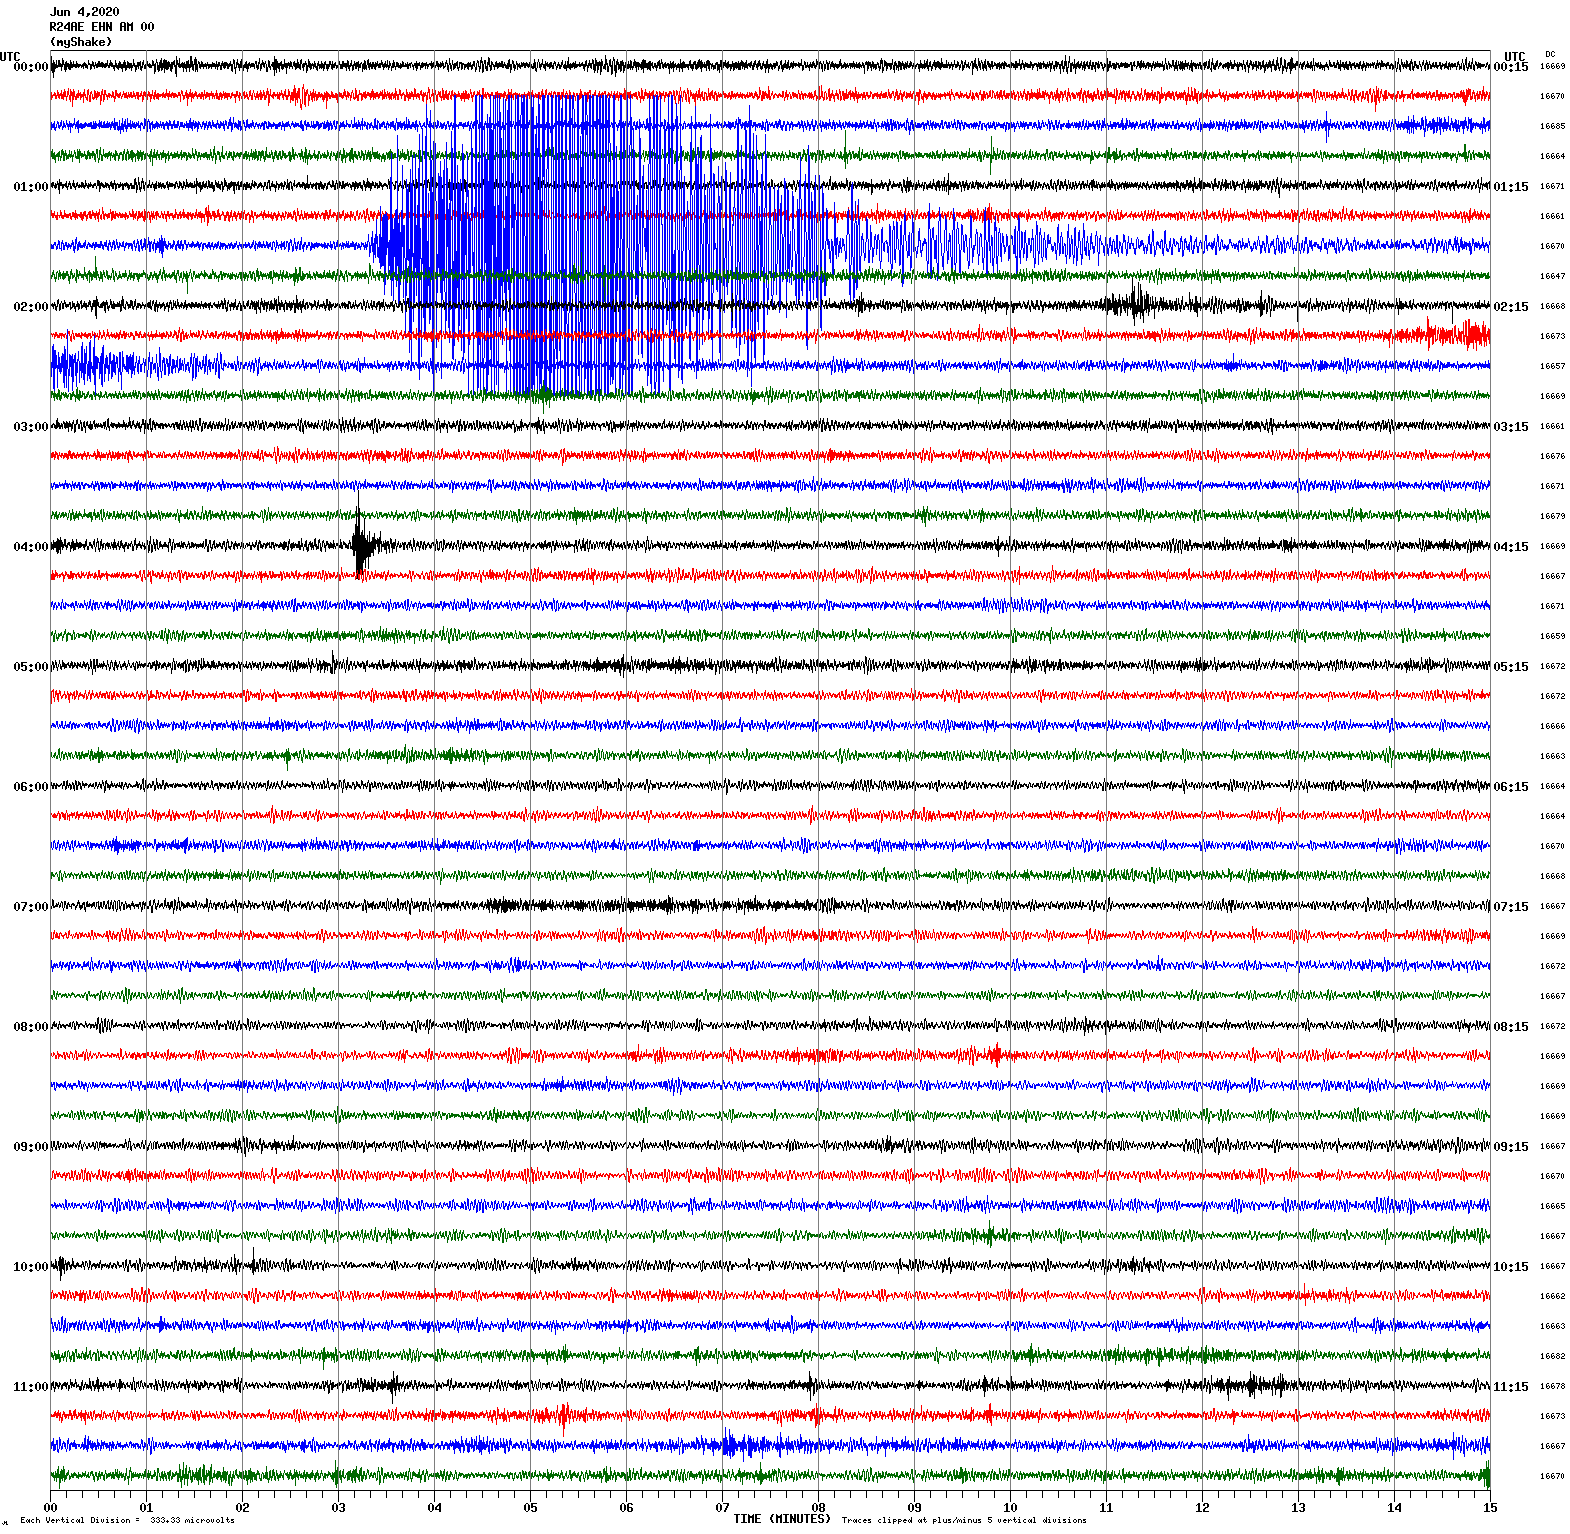 /seismic-data/R24AE/R24AE_EHN_AM_00.2020060400.gif